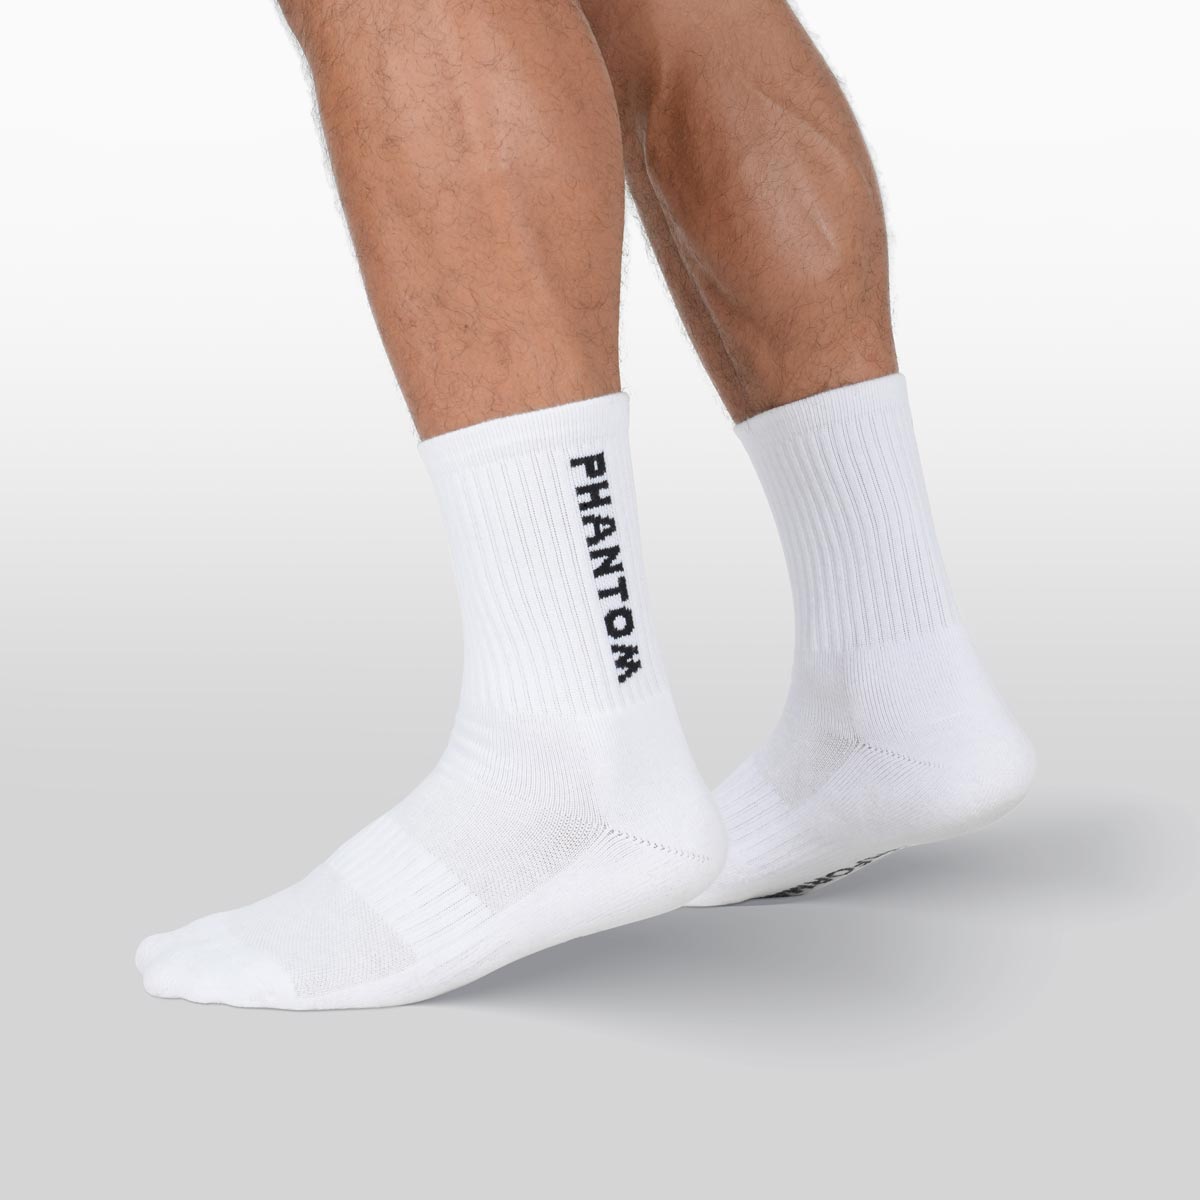 Performance socks